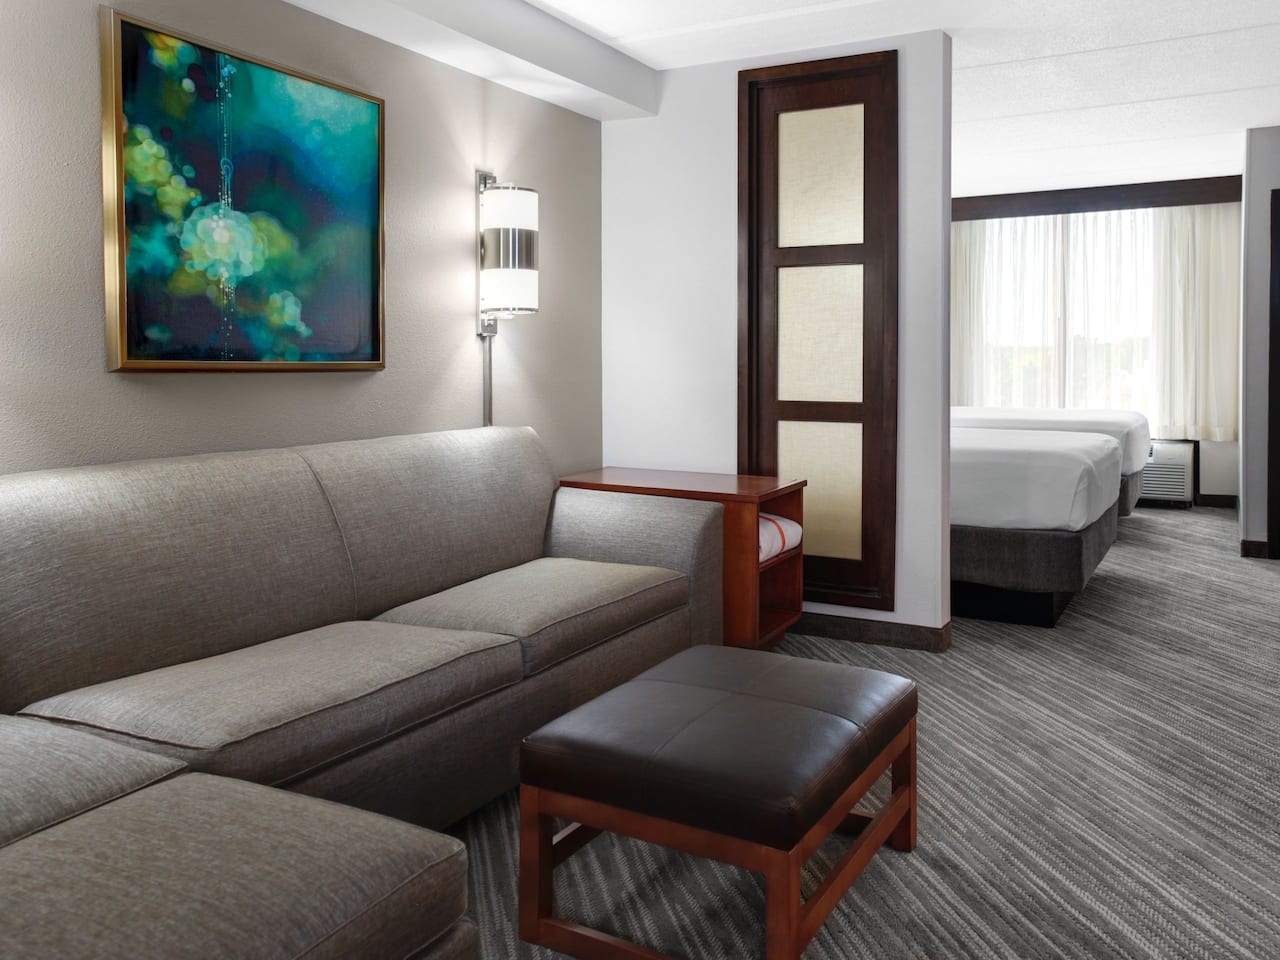 Cincinnati hotel room with double queen-sized beds and seating area at Hyatt Place Cincinnati Northeast